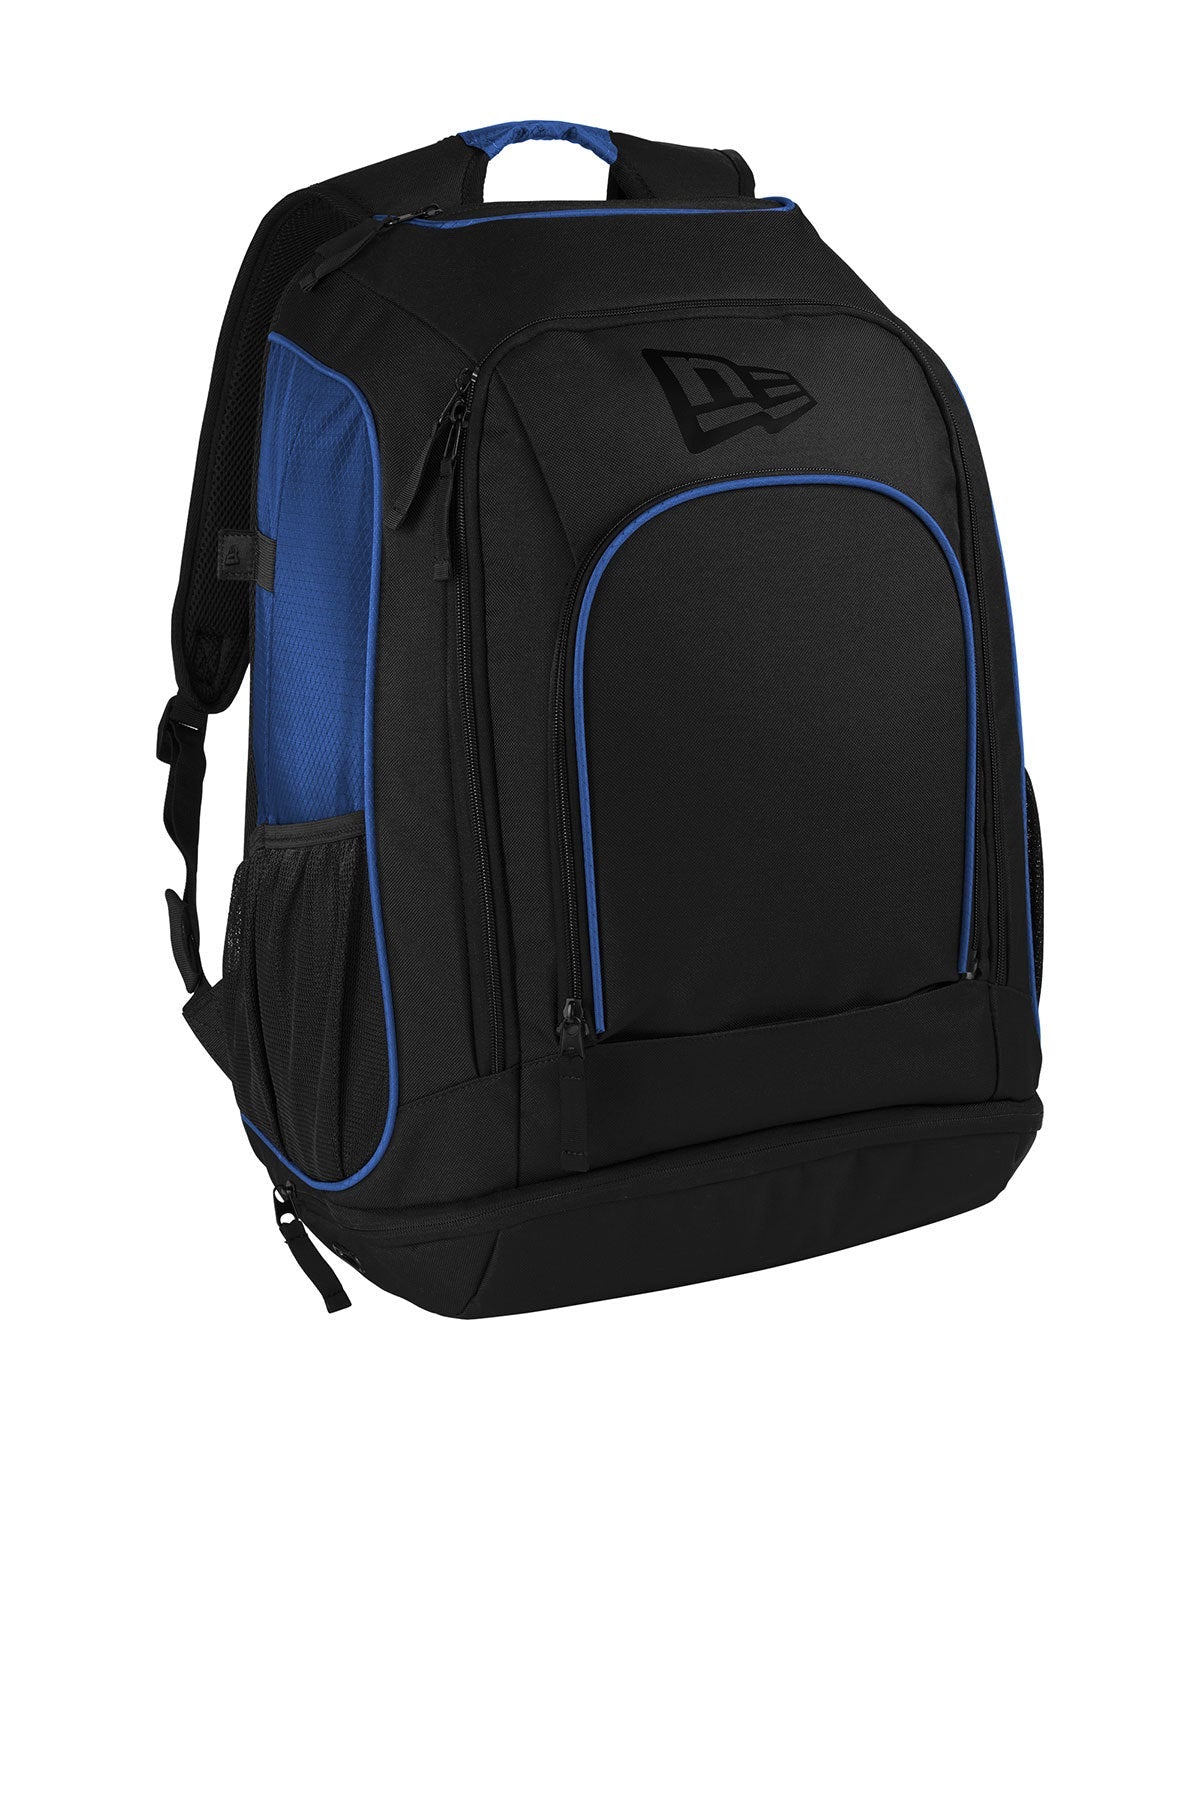 New Era Shutout Custom Backpacks, Royal Black